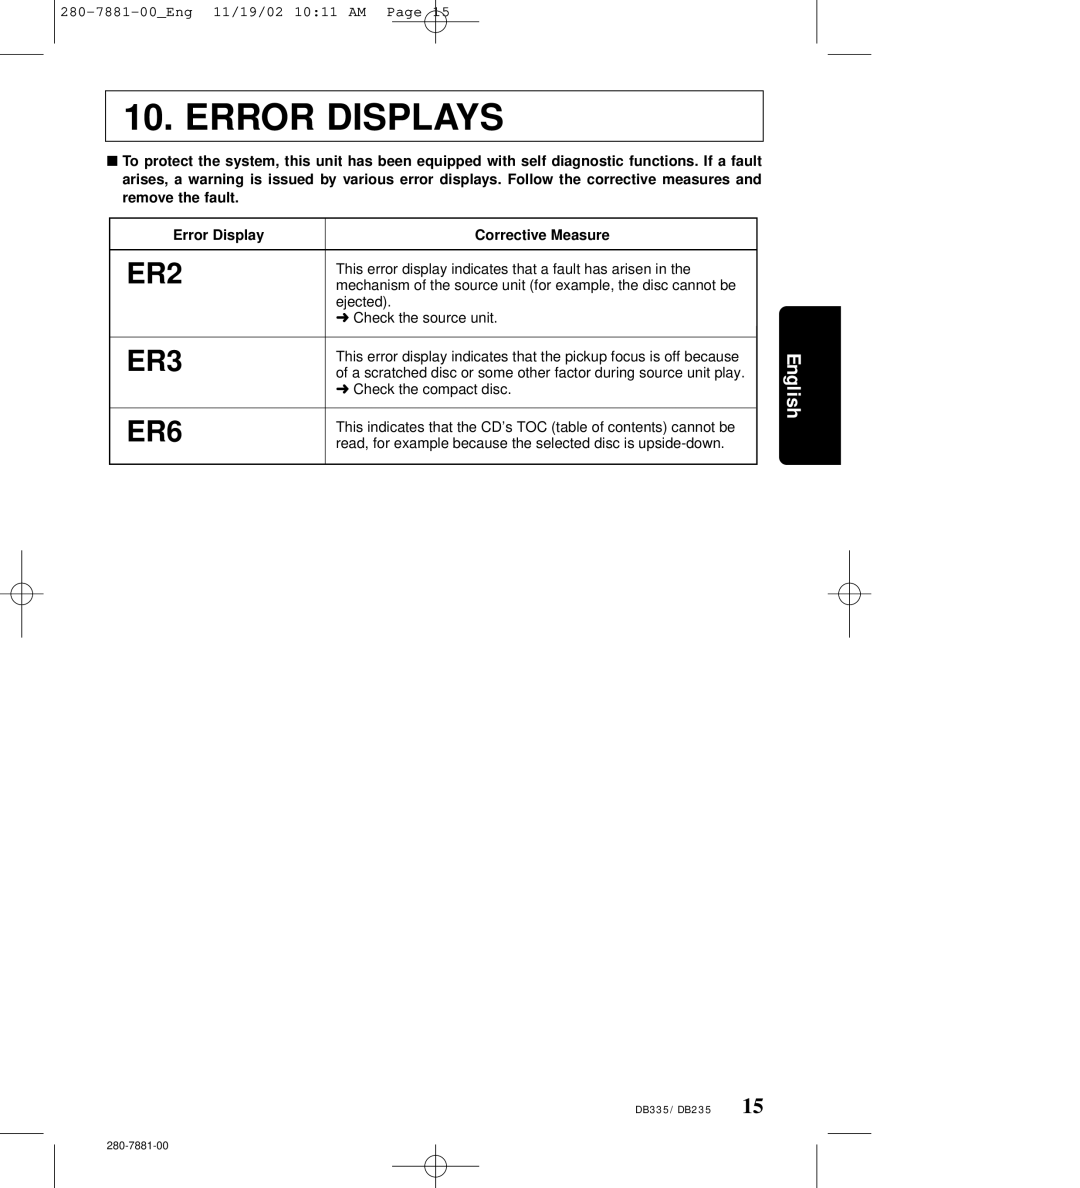 Clarion DB235 owner manual Error Displays, English 